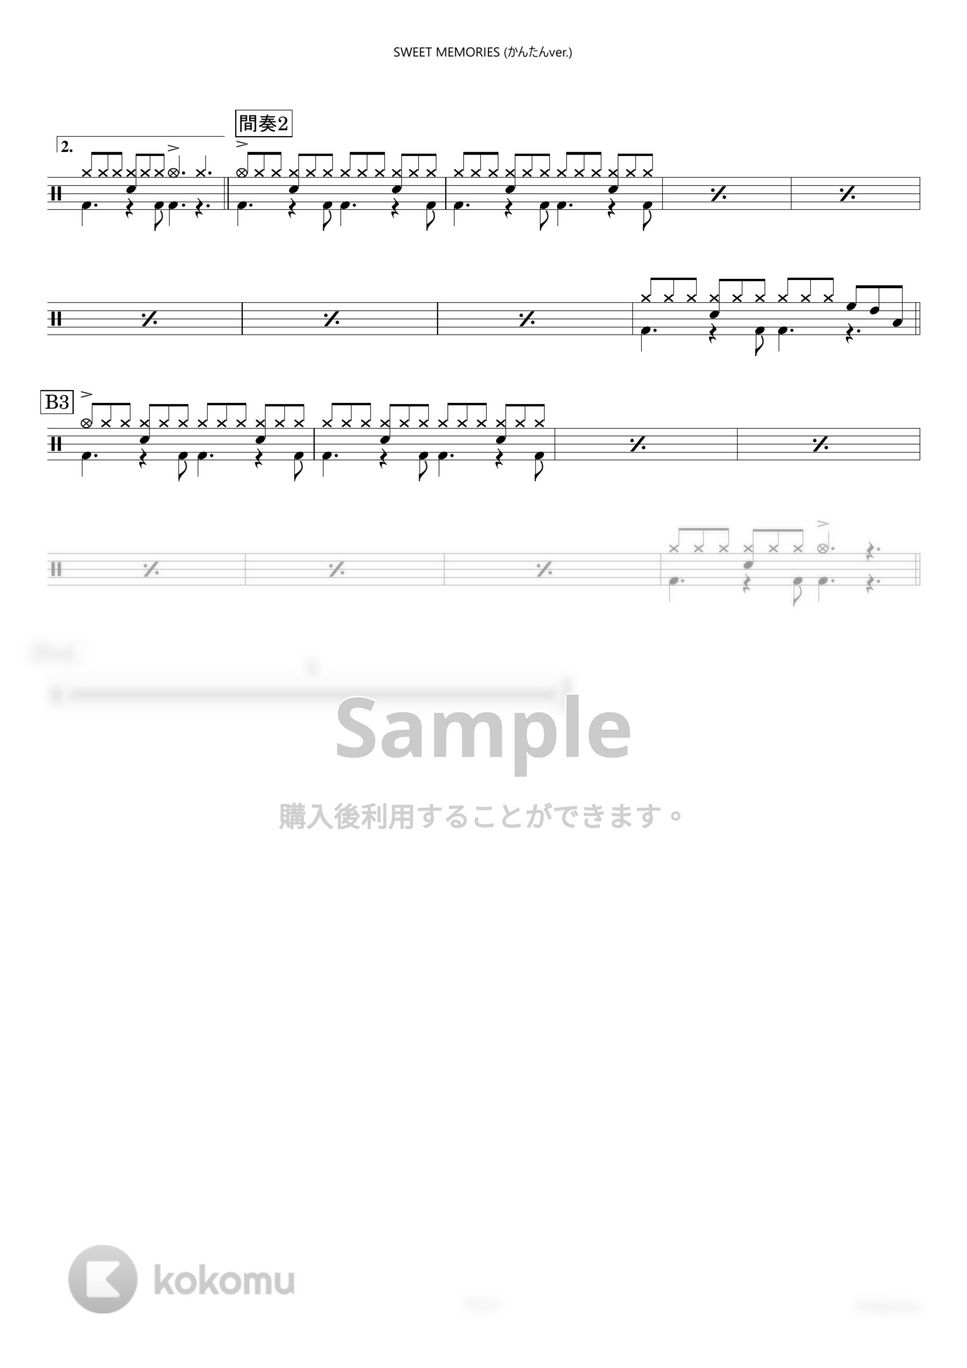 松田聖子 - SWEET MEMORIES〔初心者向け〕 by HYdrums